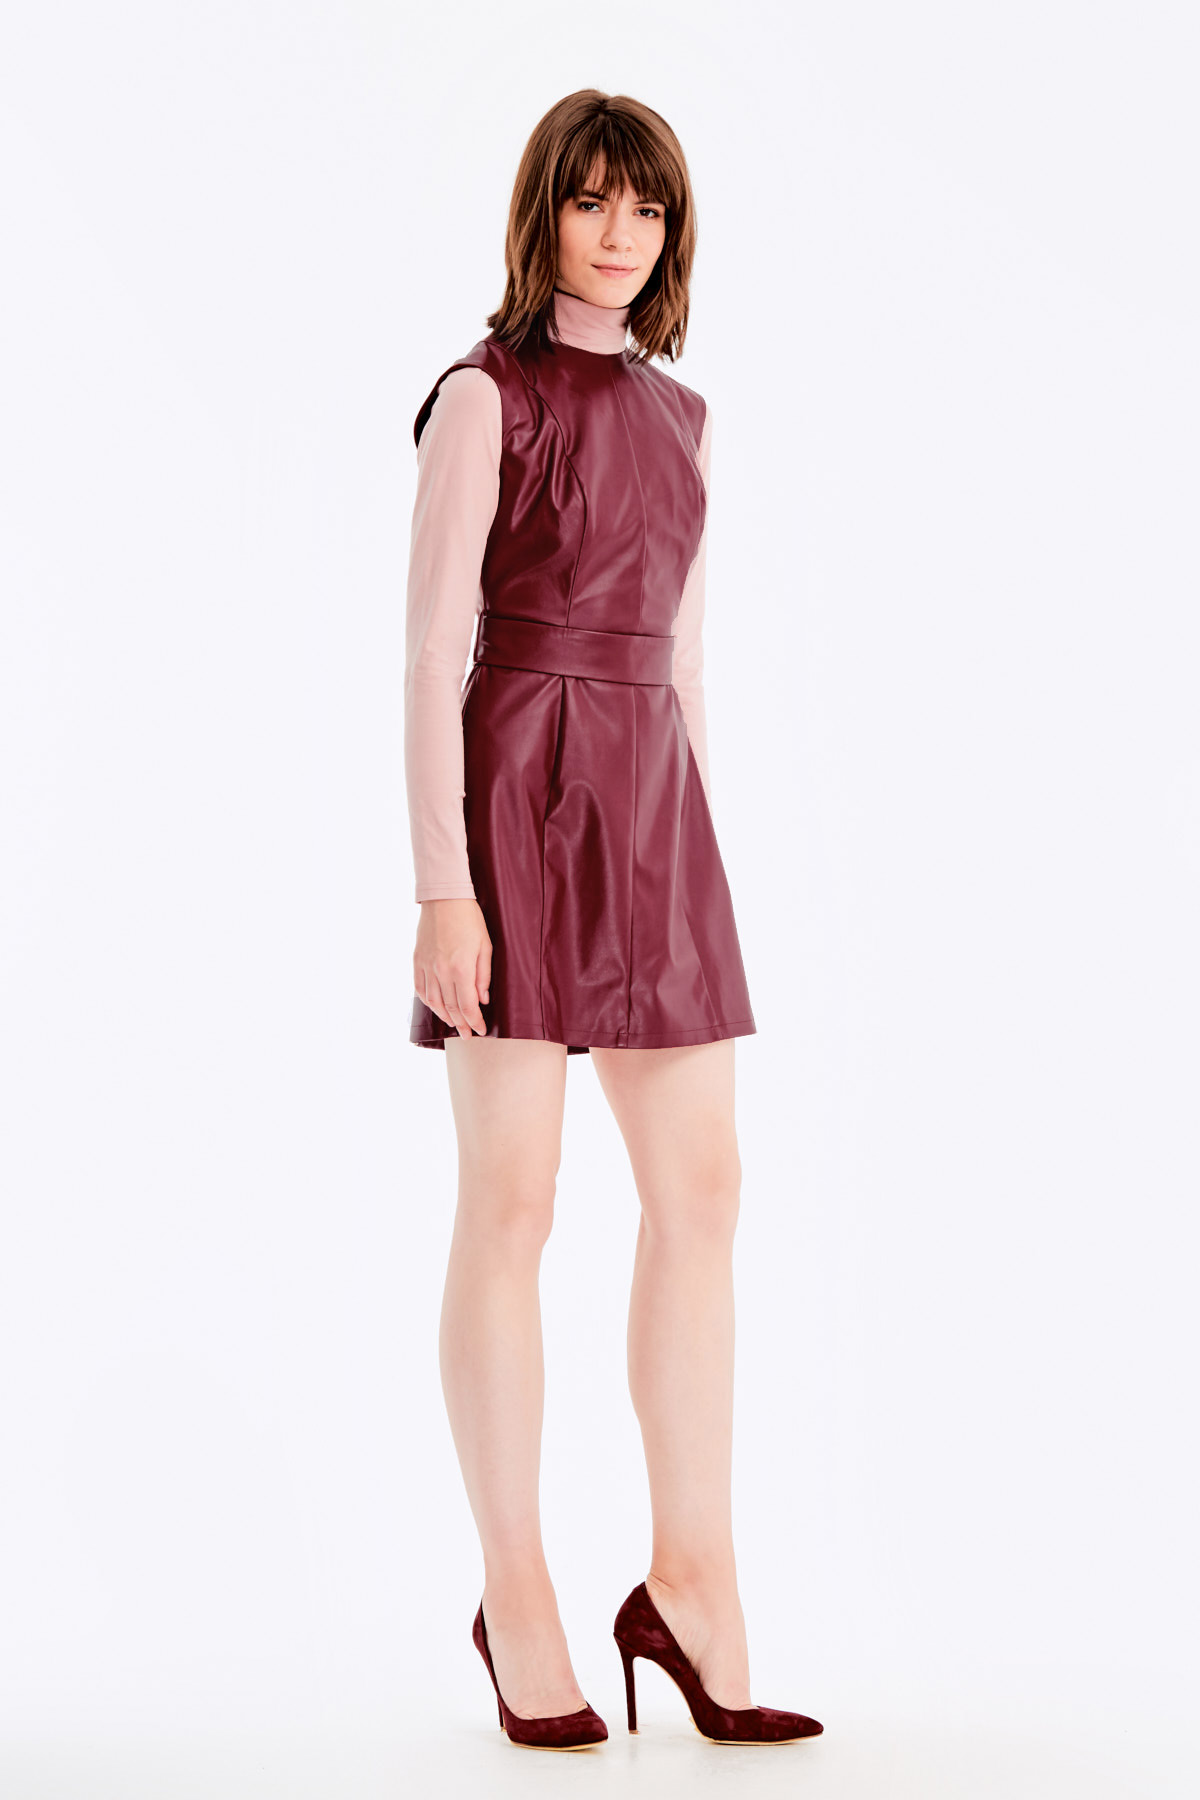 Below-knee burgundy leather dress , photo 12